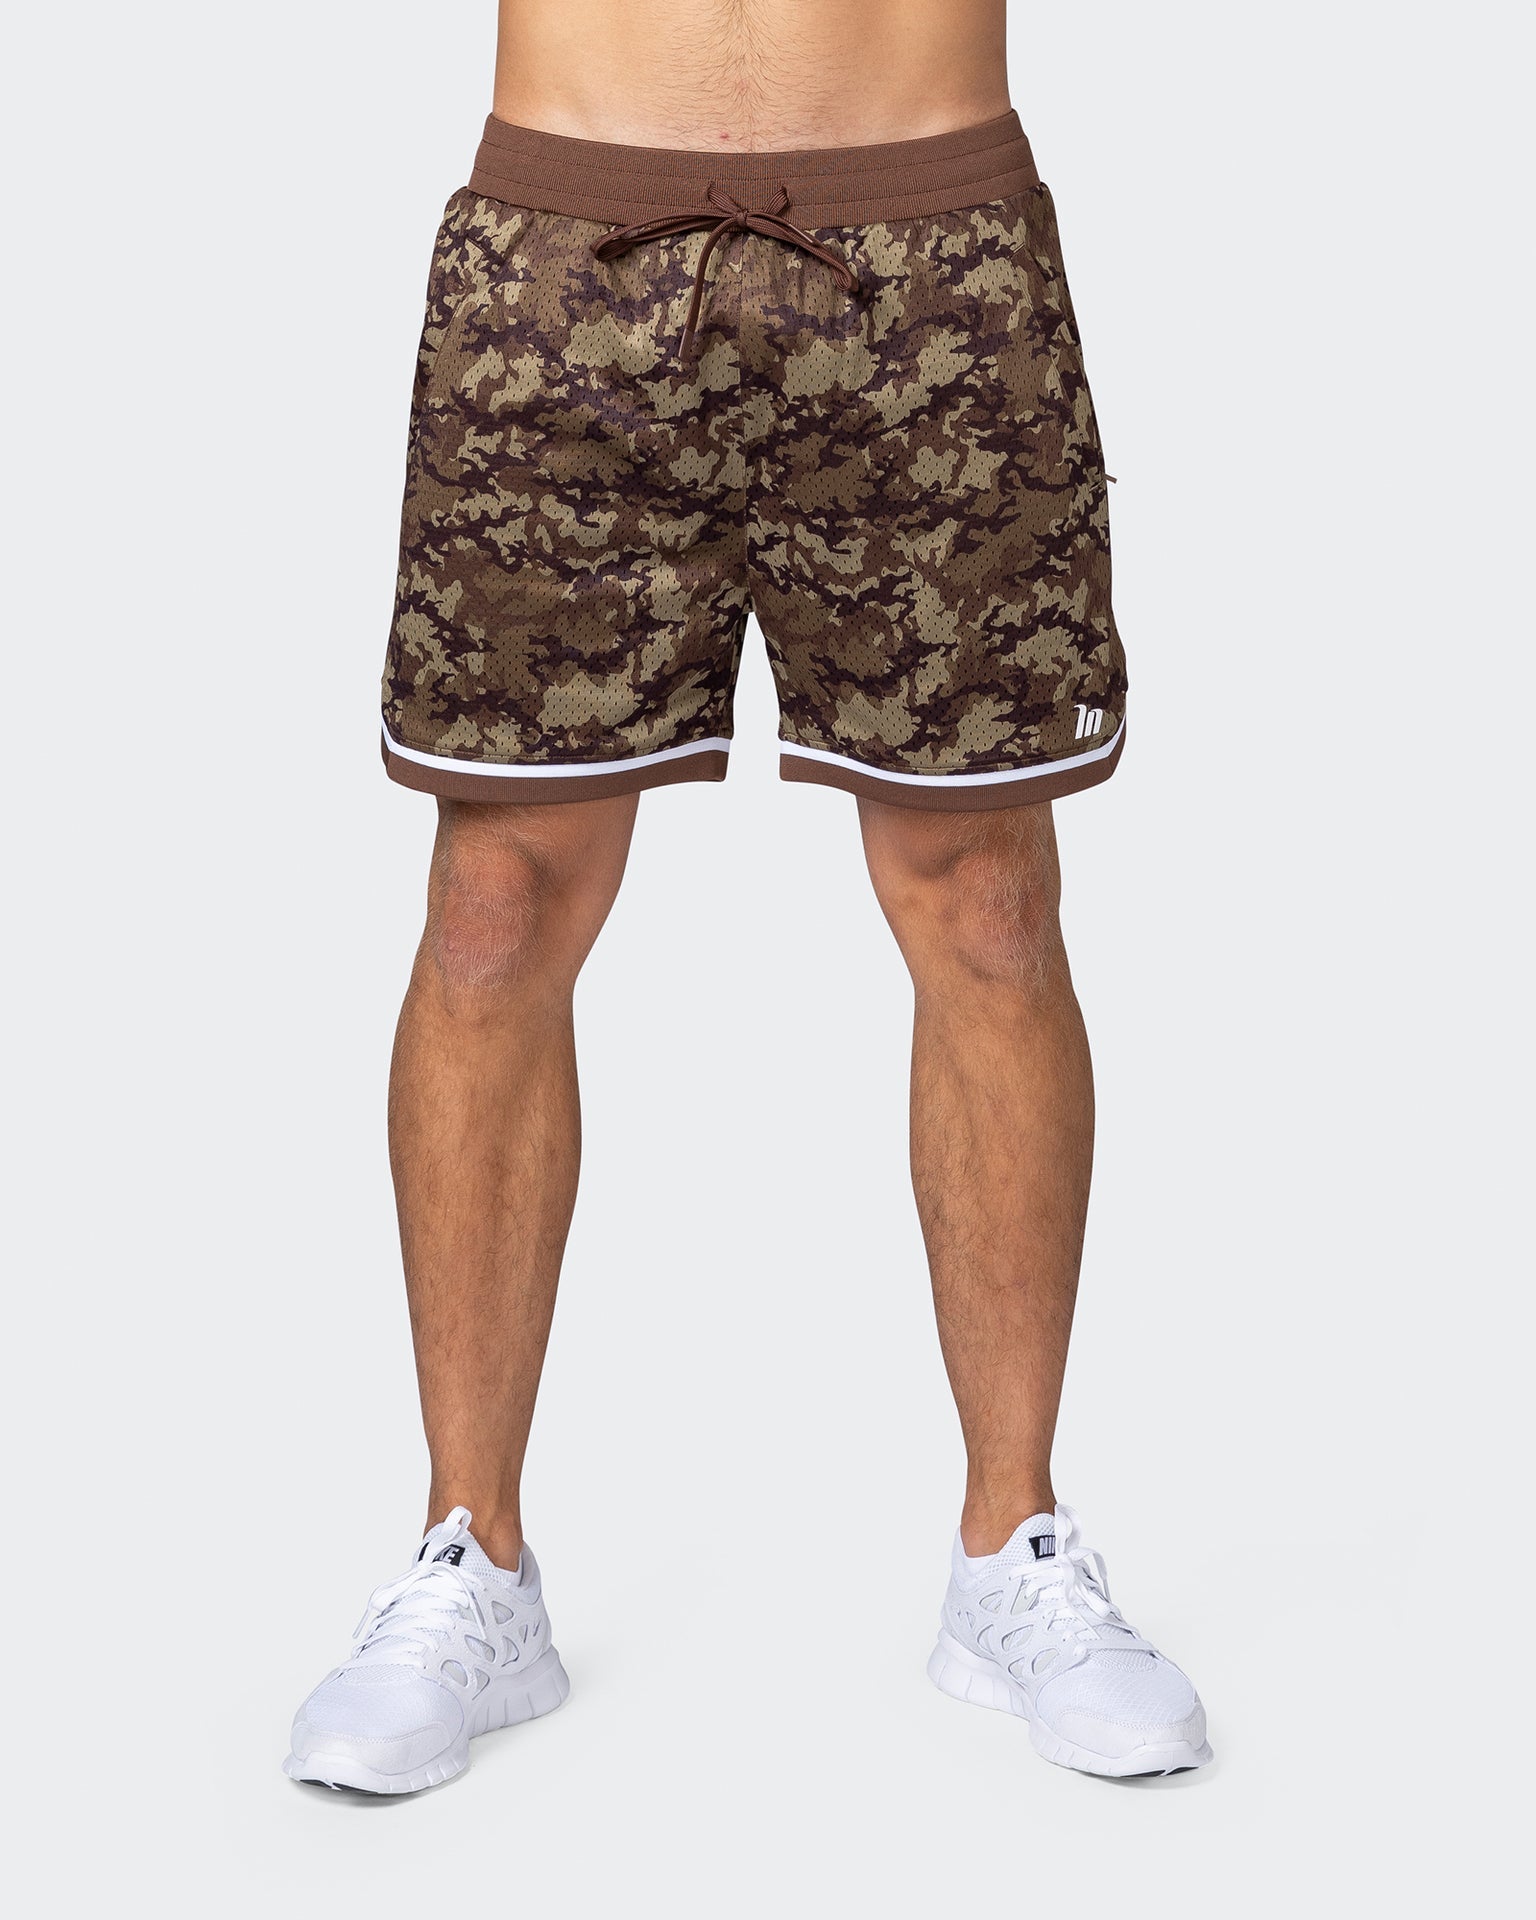 musclenation Shorts Mens 5" Basketball Shorts - Chestnut Camo Print